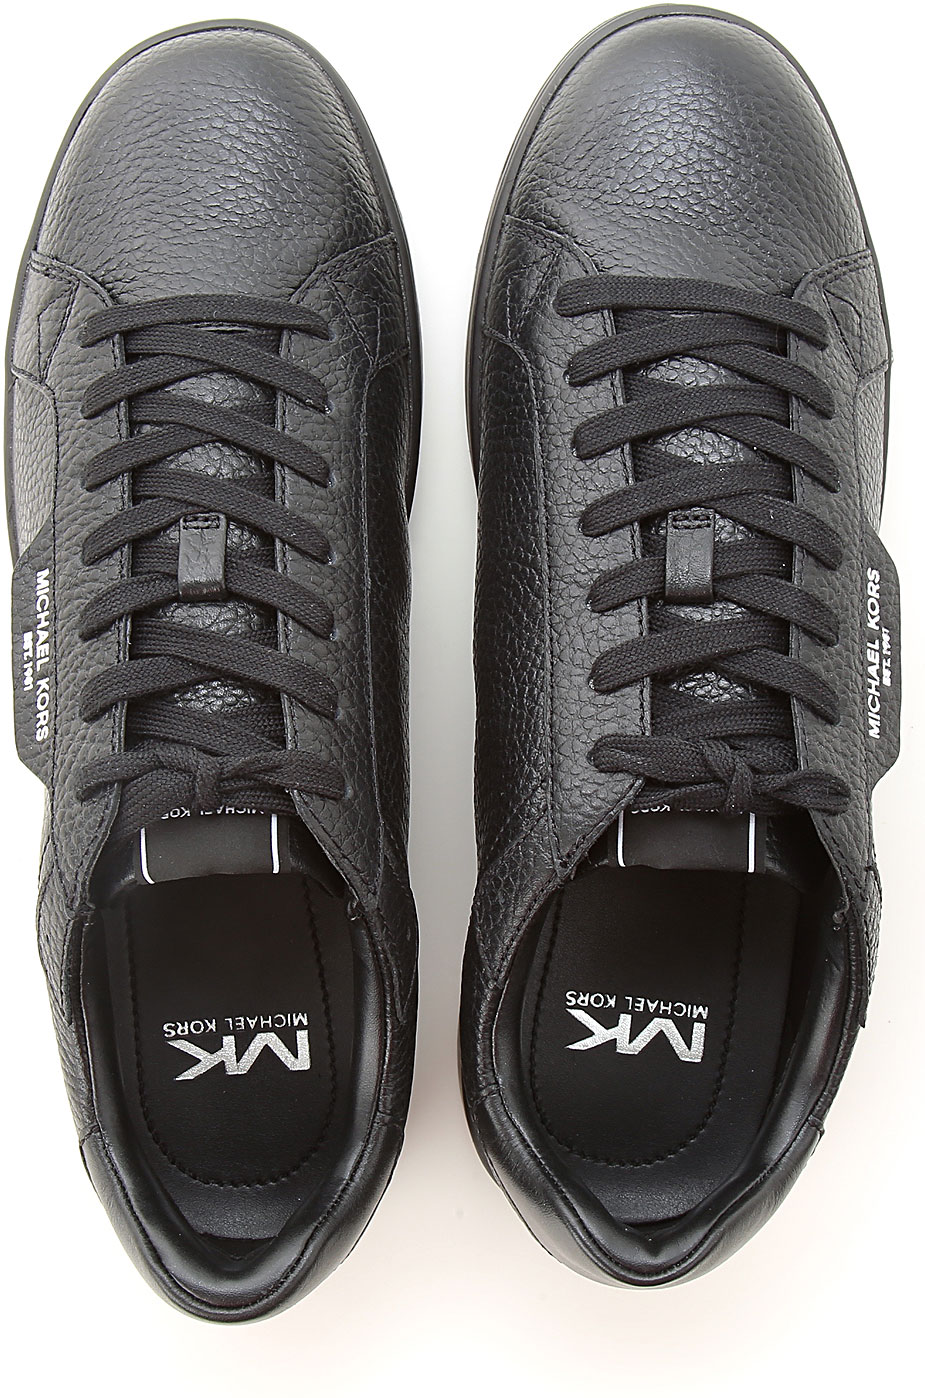 Mens Shoes Michael Kors, Style code: 42f9kefs1l-001-